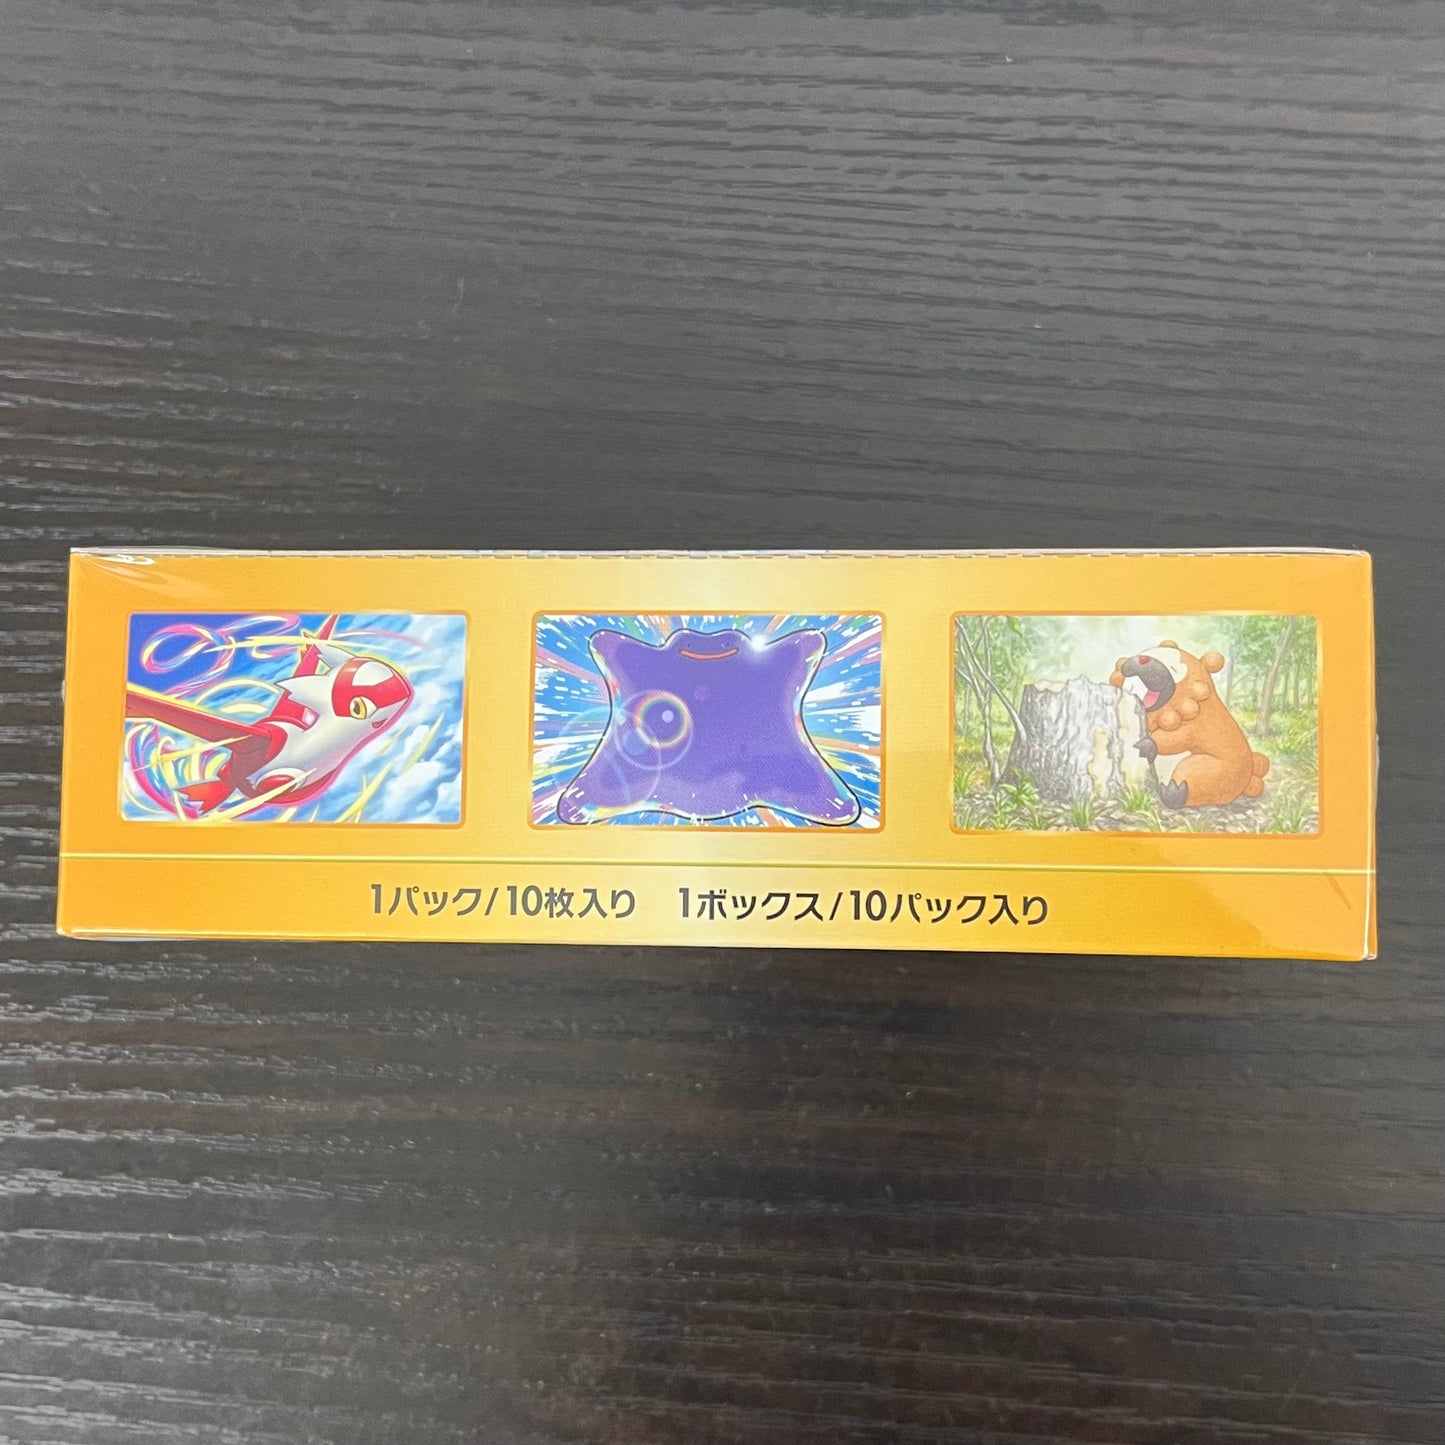 Pokemon Card Sword & Shield High Class Pack VSTAR Universe Box s12a Japanese